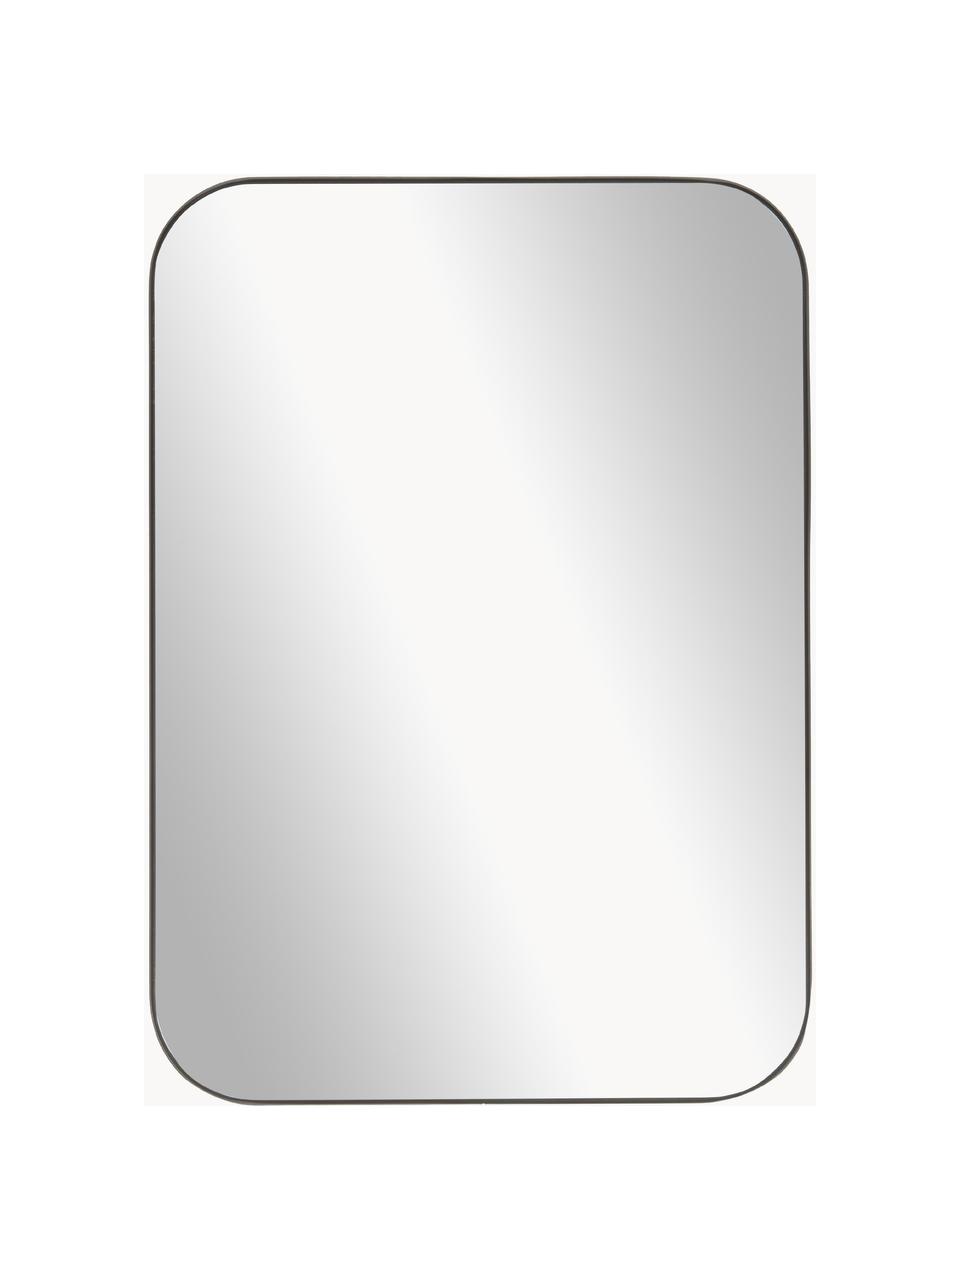 Nástěnné zrcadlo s kovovým rámem Lily, Černá, Š 50 cm, V 70 cm